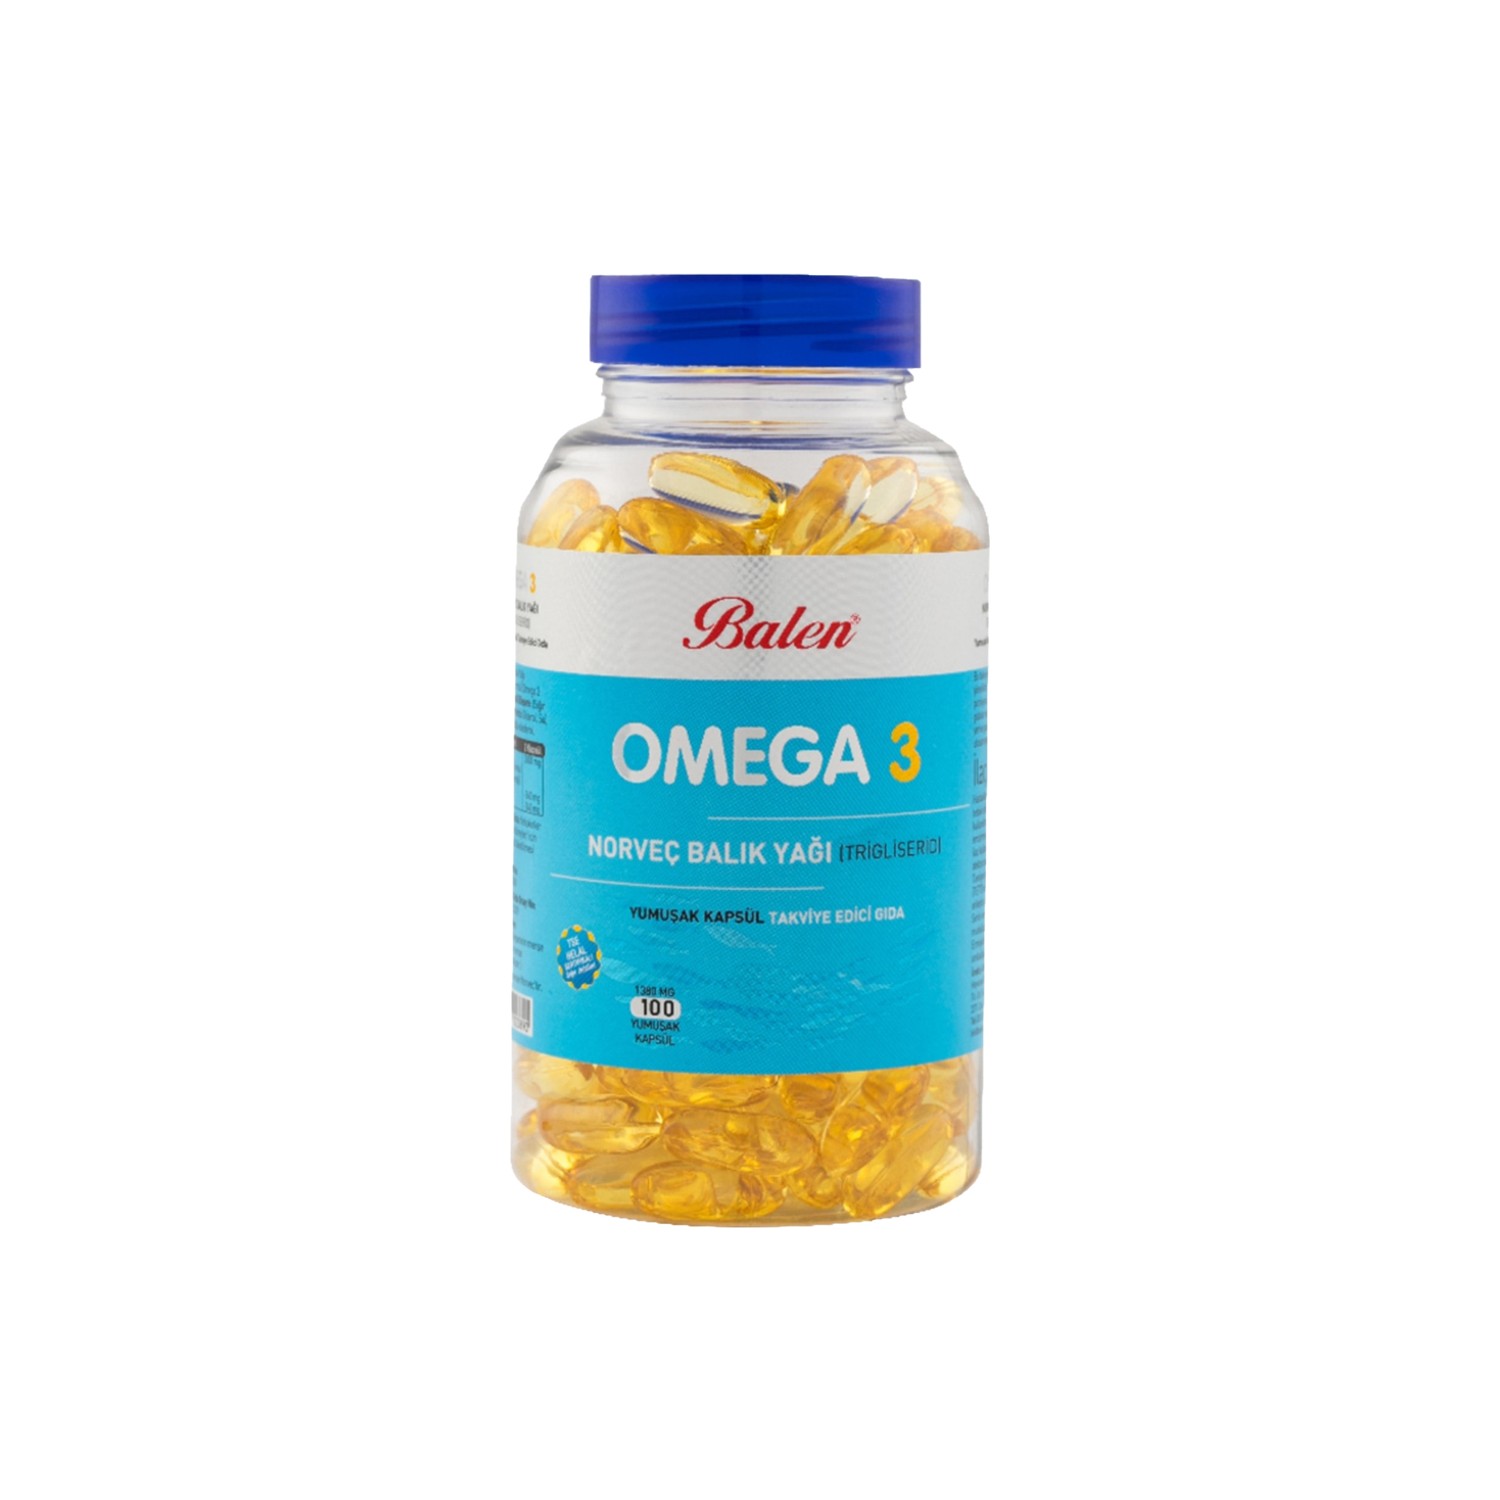 Рыбий жир Balen Omega 3, 100 капсул, 1380 мг рыбий жир биафишенол лососевый 350 мг 100 шт капсулы